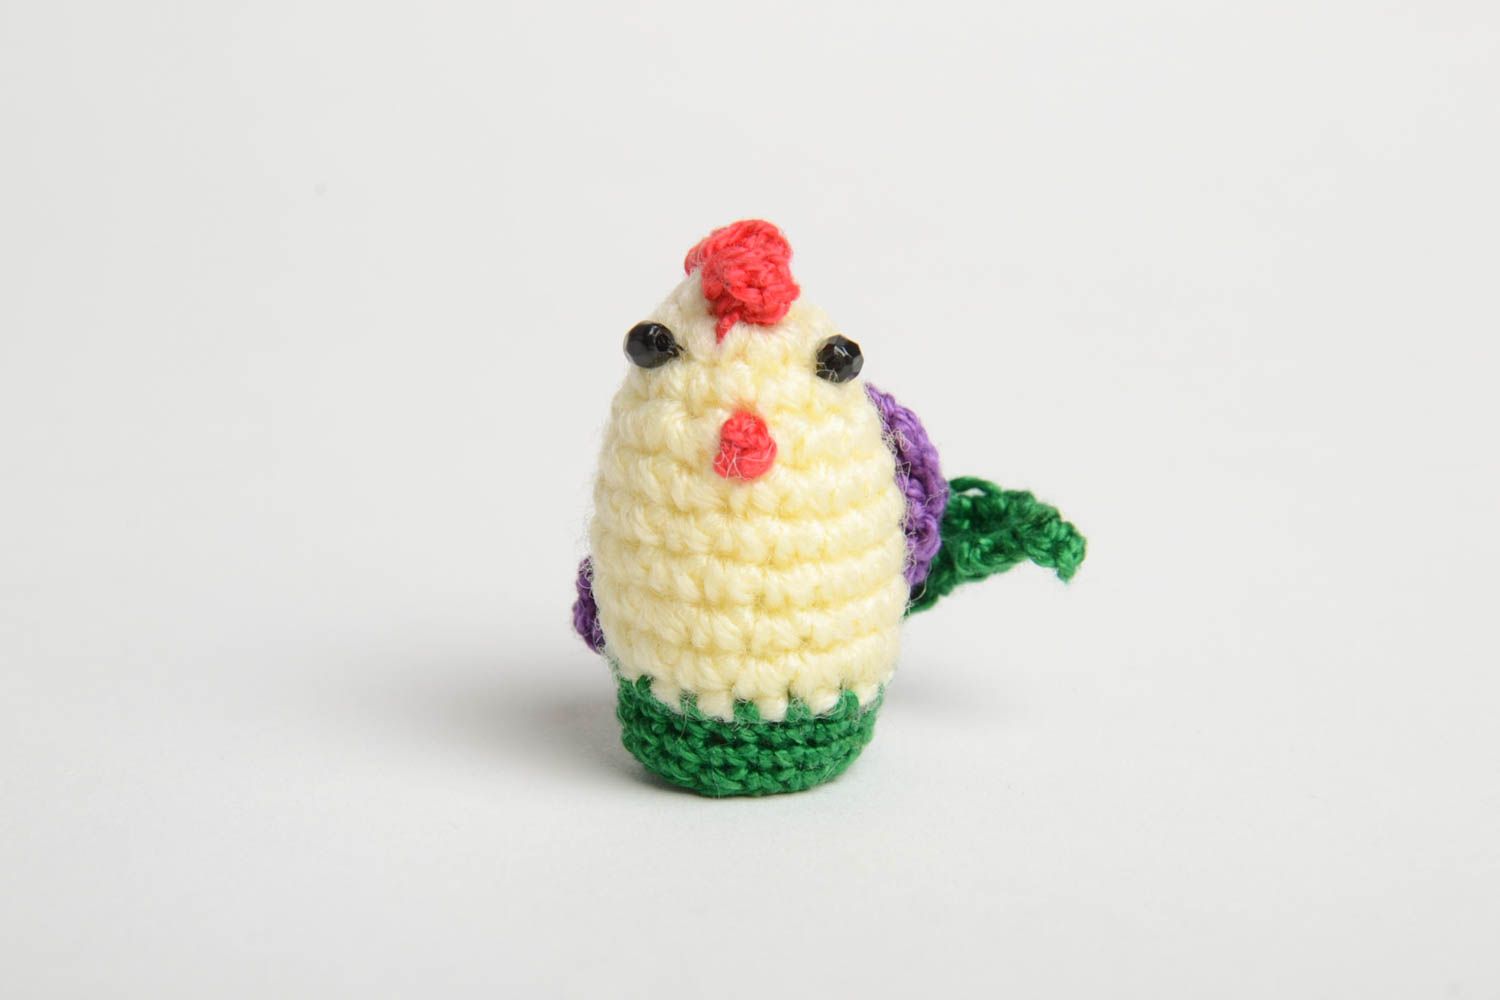 Handmade toy designer toy animal toy gift for baby nursery decor crocheted toy photo 2